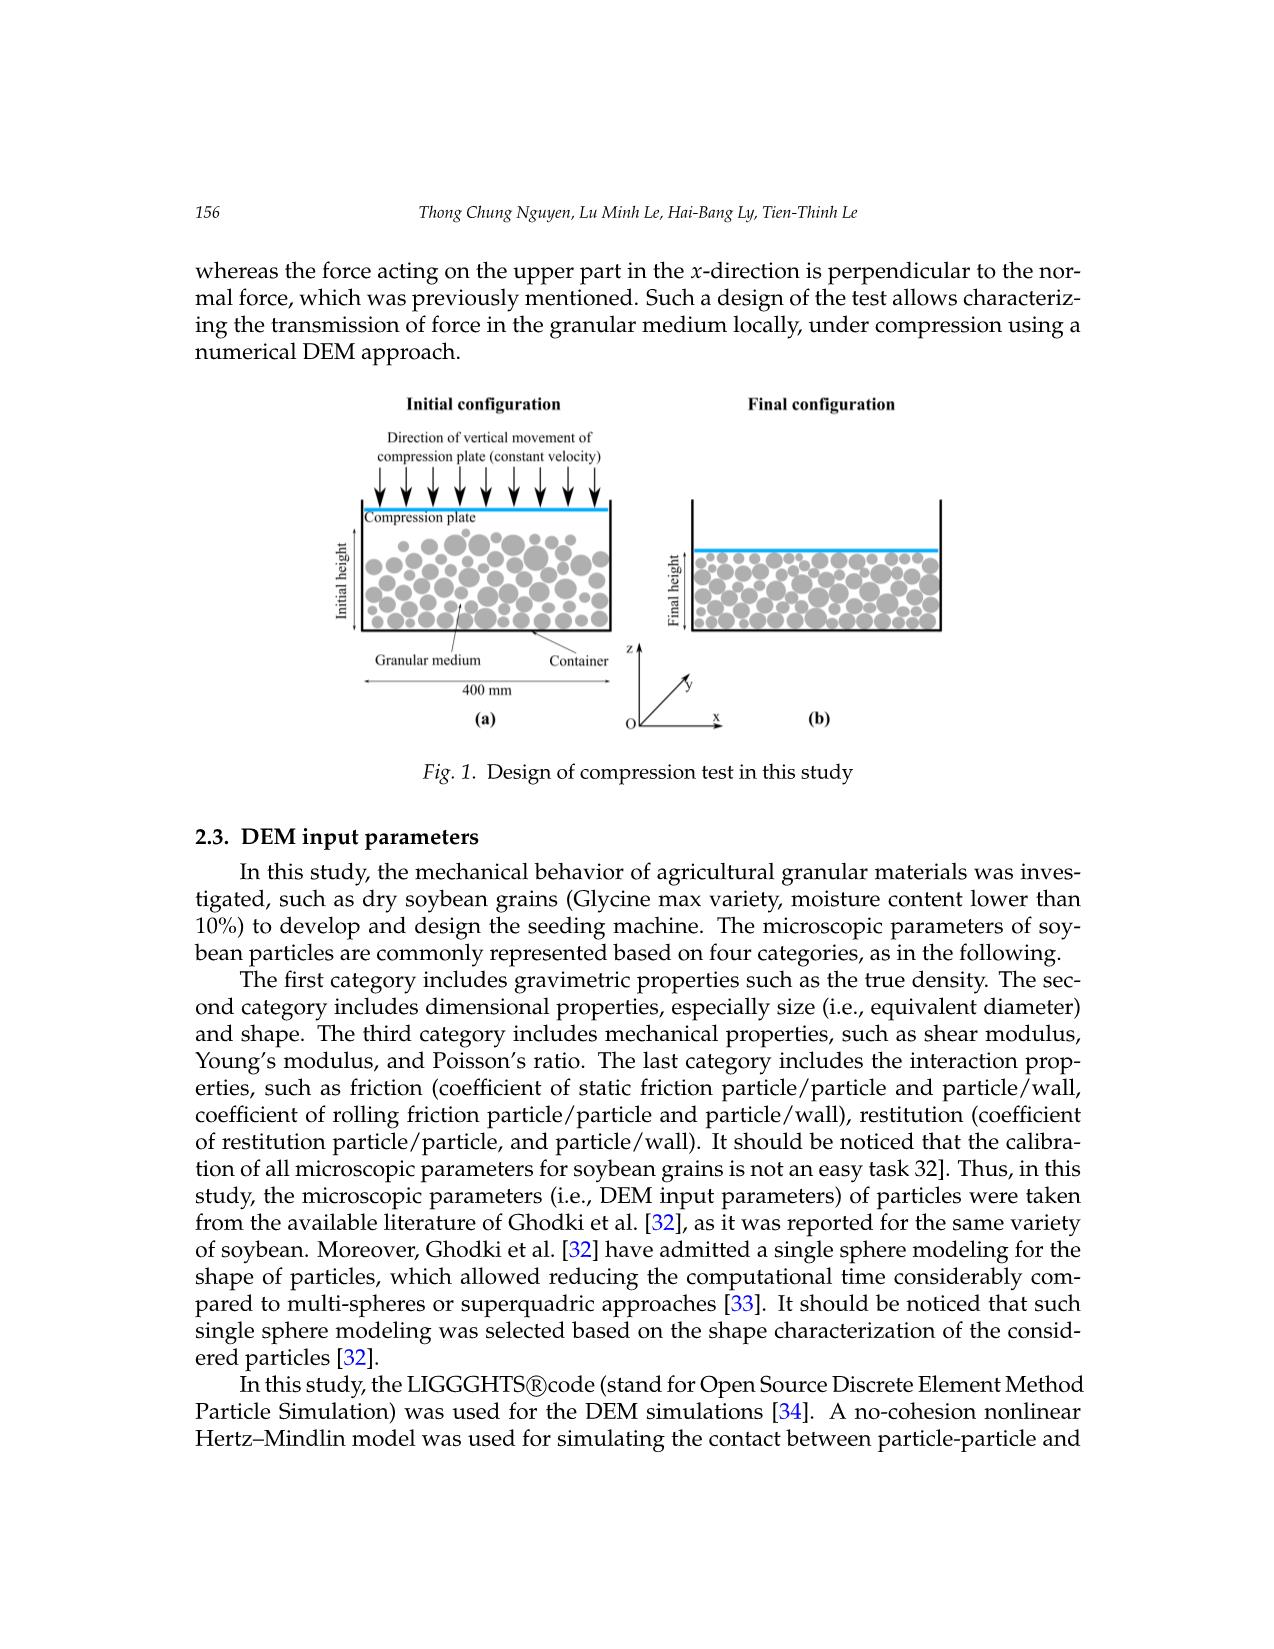 Numerical investigation of force transmission in granular media using discrete element method trang 4